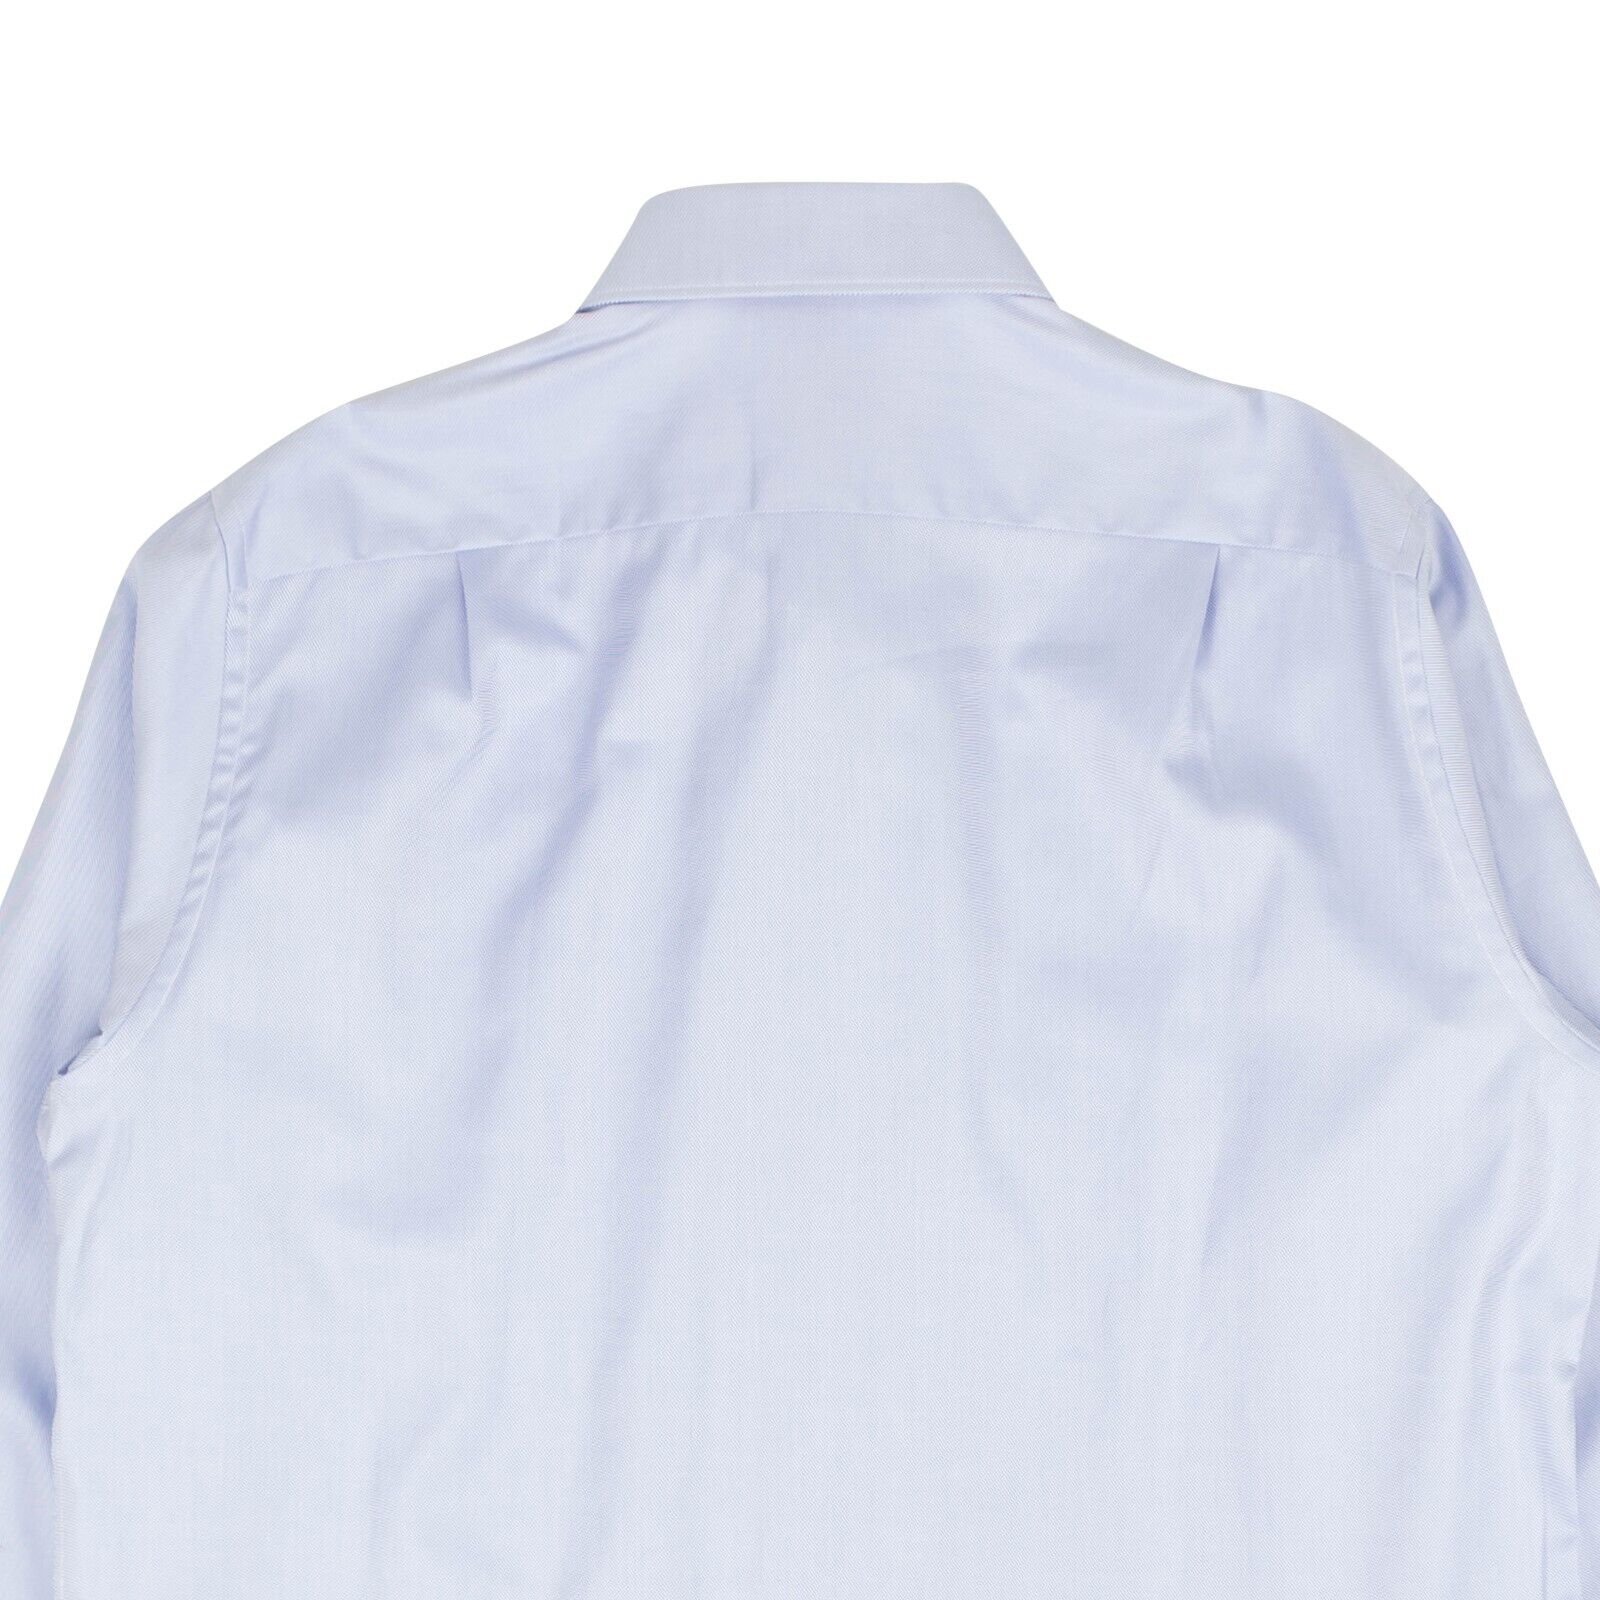 Ermenegildo Zegna Woven Stripe Dress Shirt - Light Blue